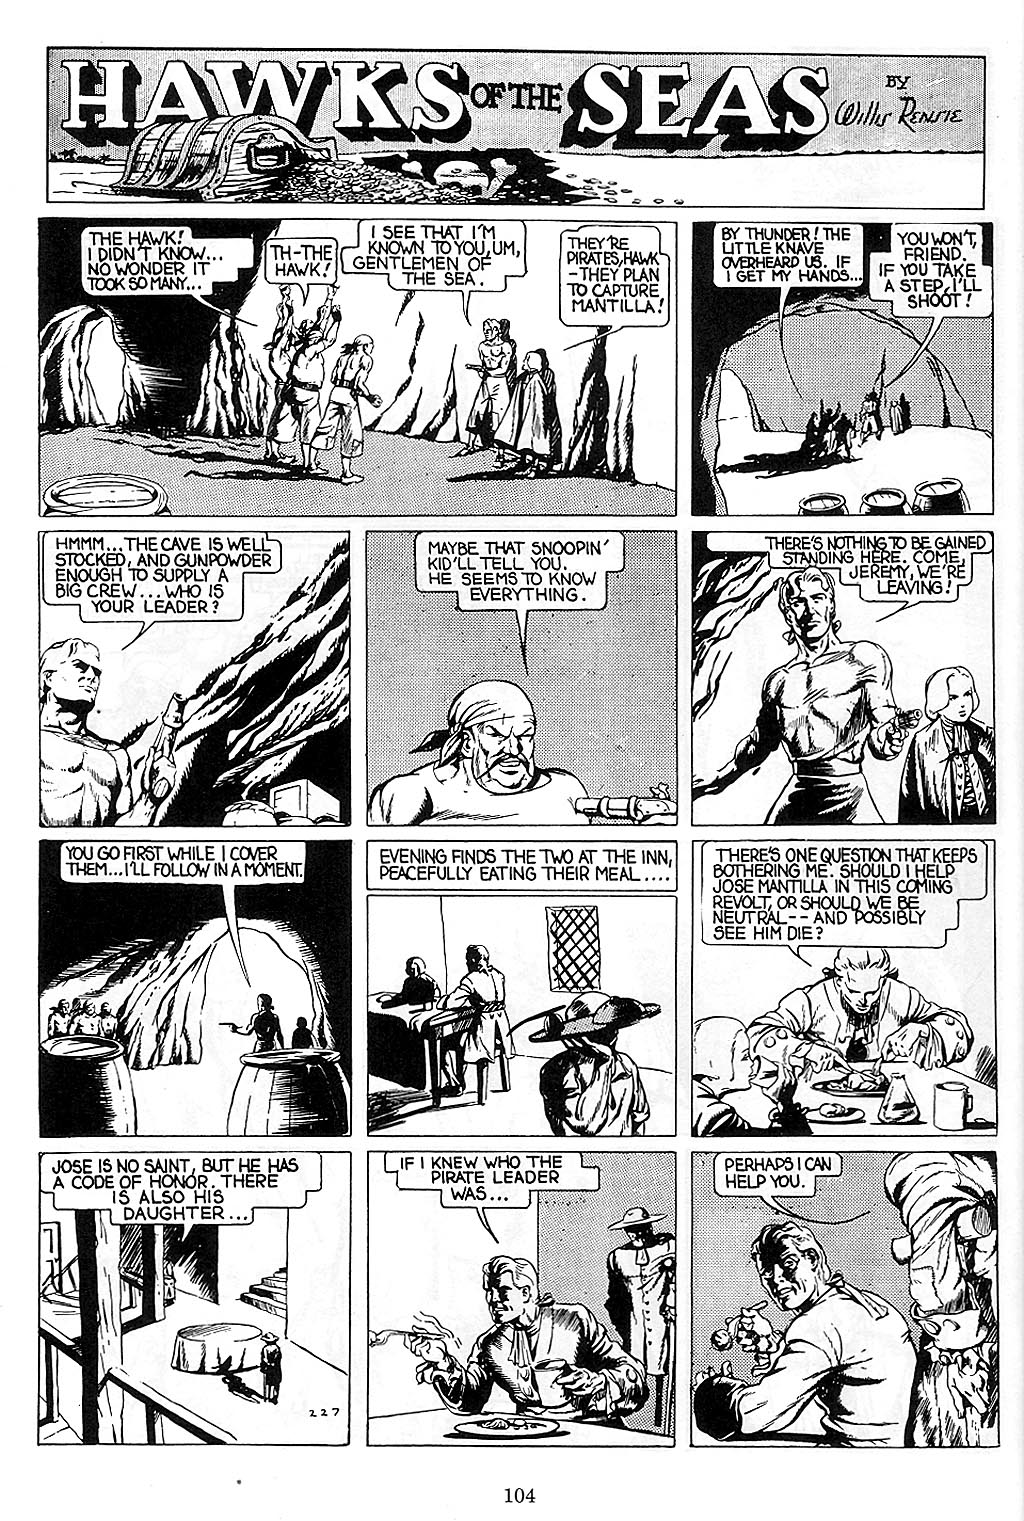 Read online Will Eisner's Hawks of the Seas comic -  Issue # TPB - 105